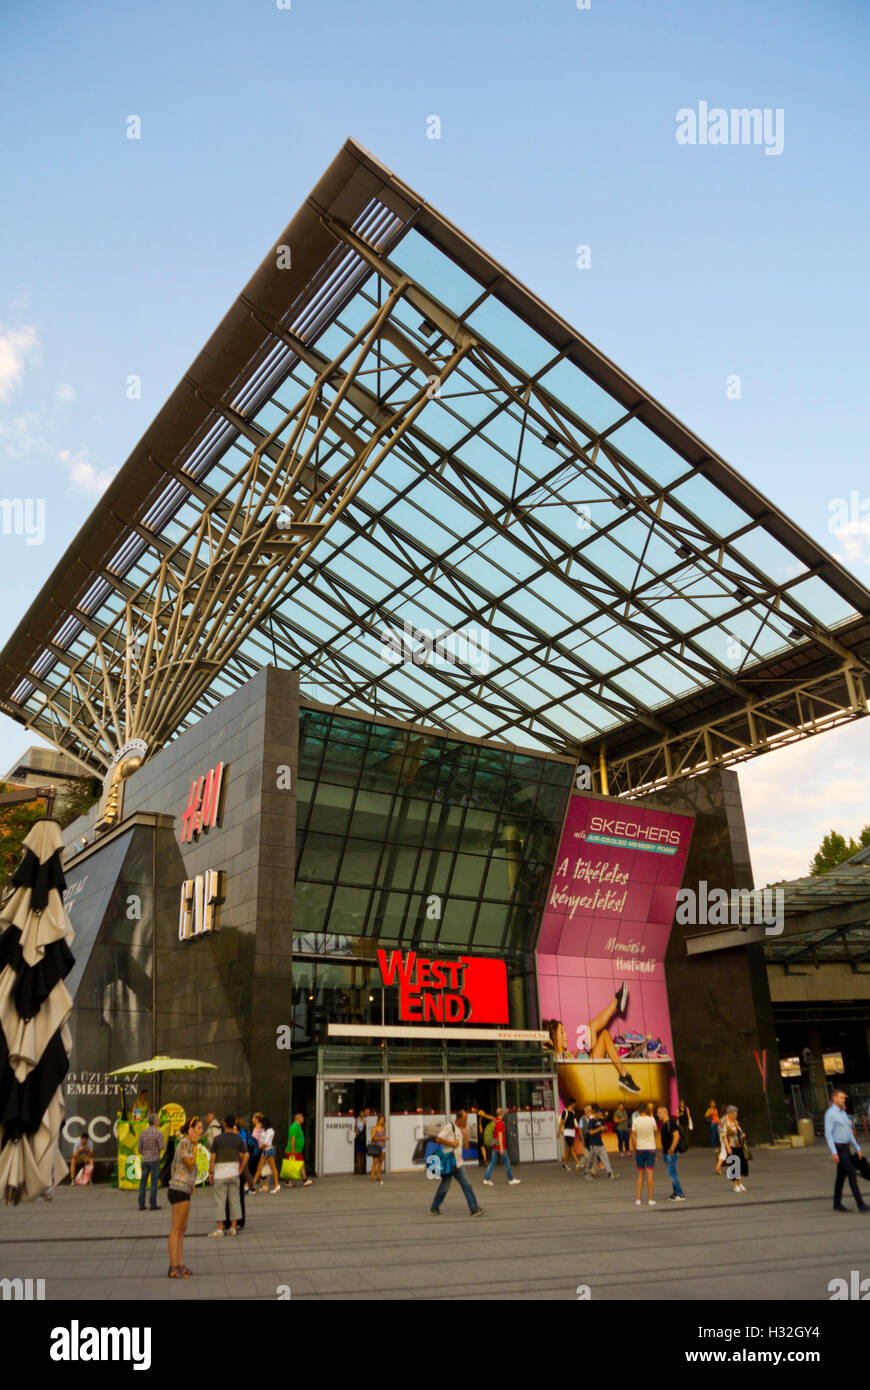 Westend city centre shopping mall, Ujlipotvaros, Budapest, Hungary, Europe Stock Photo